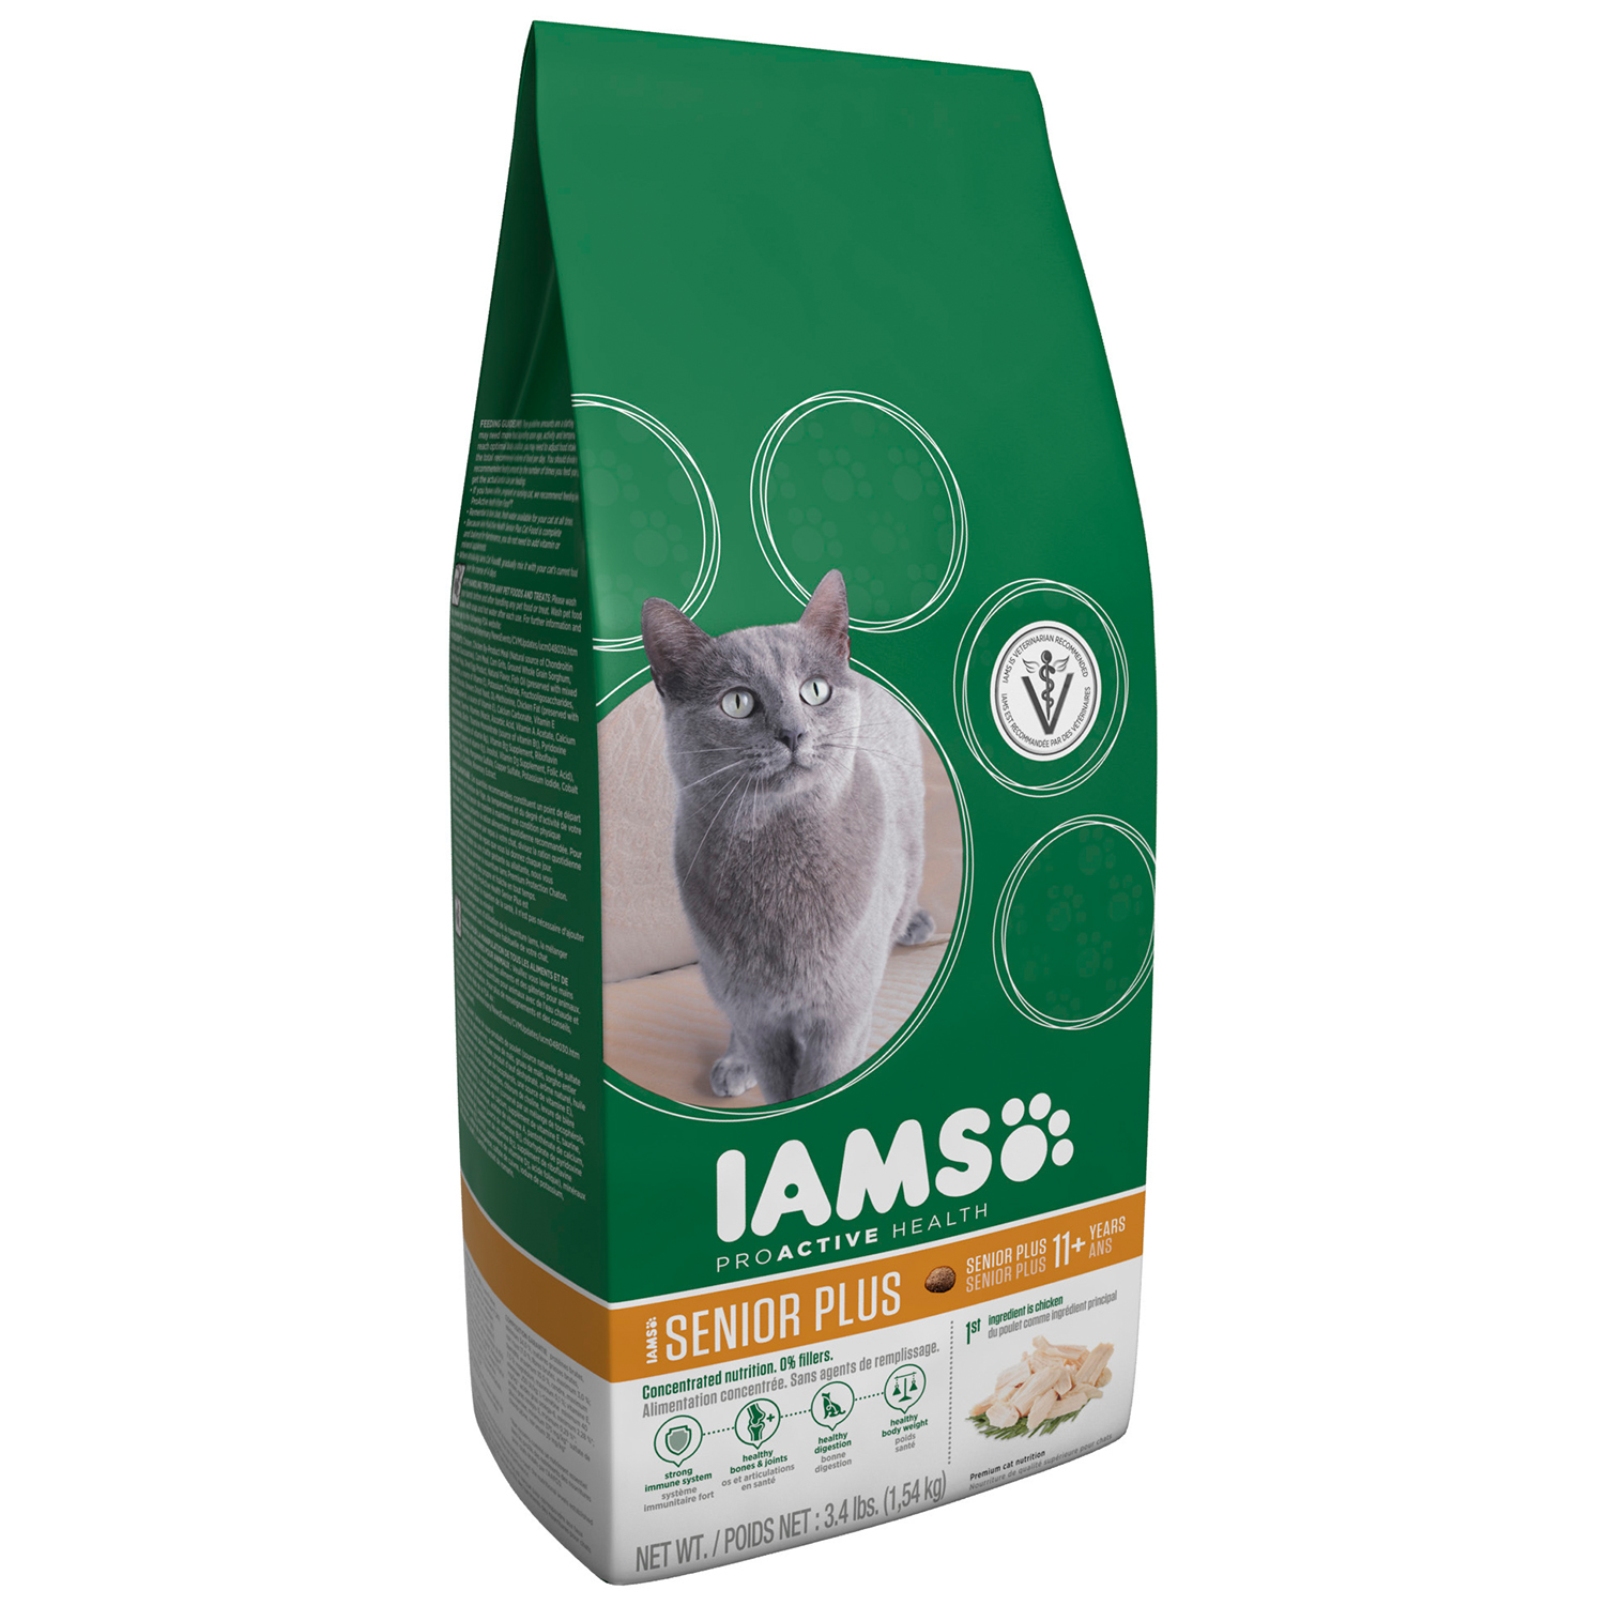 Iams Cat Food, ProActive Health Senior Plus Dry, 3.4 lb Pet Supplies